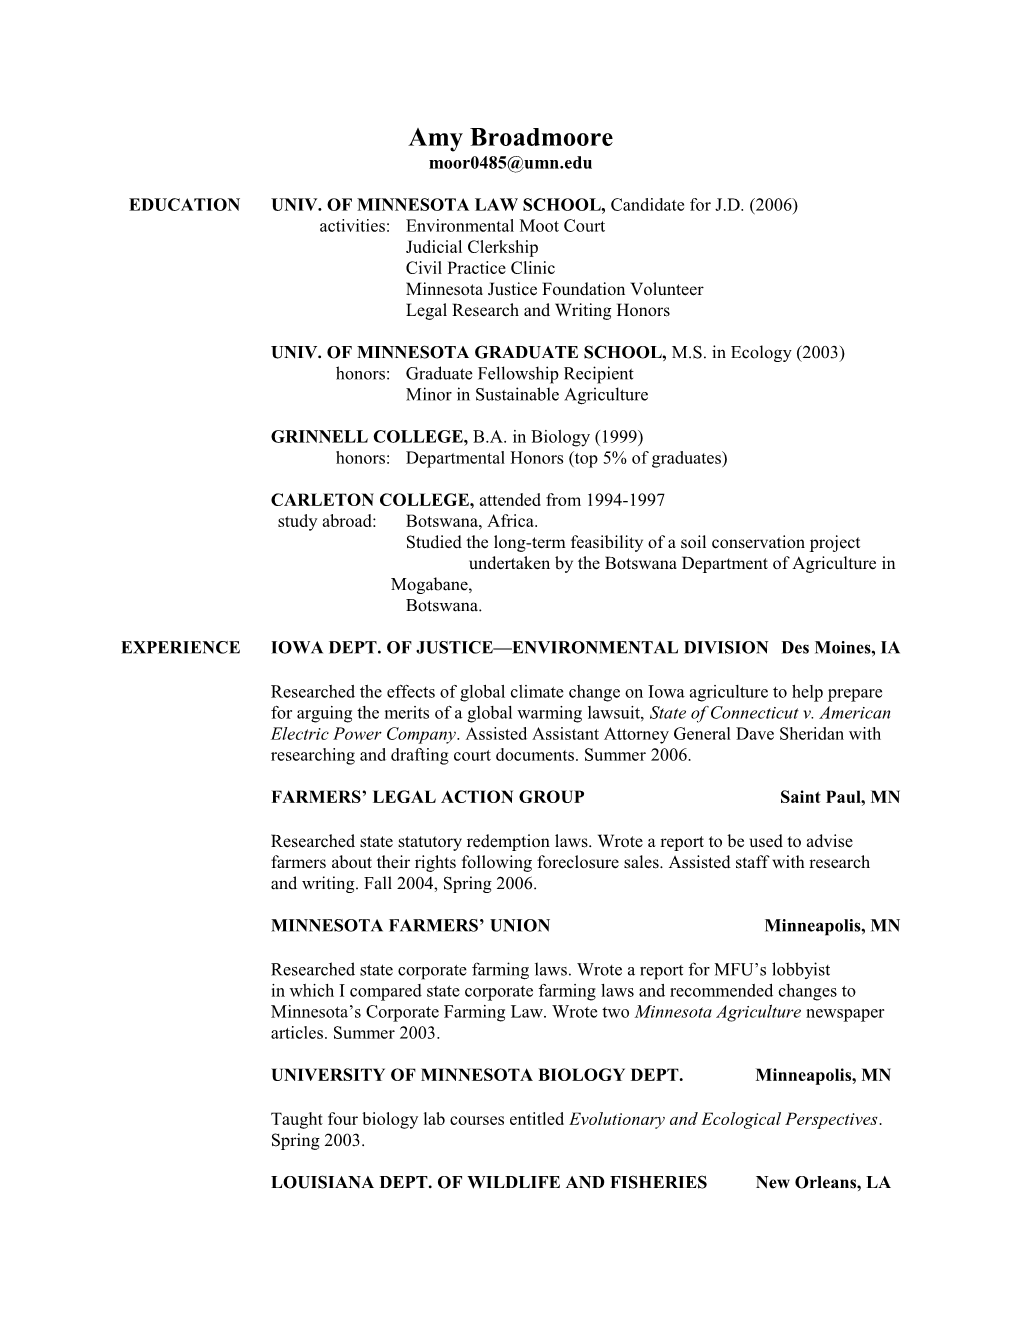 EDUCATION UNIV. of MINNESOTA LAW SCHOOL, Candidate for J.D. (2006)